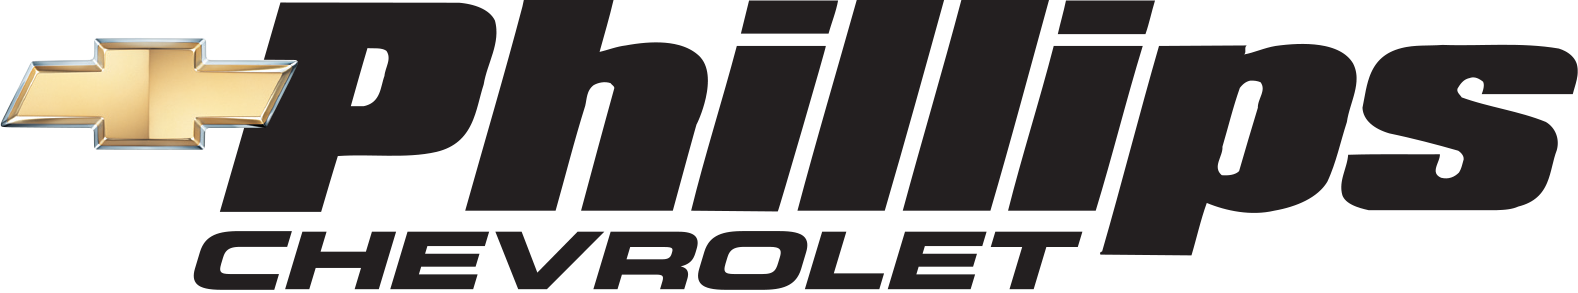 Phillips Chevrolet of Bradley, LLC Logo